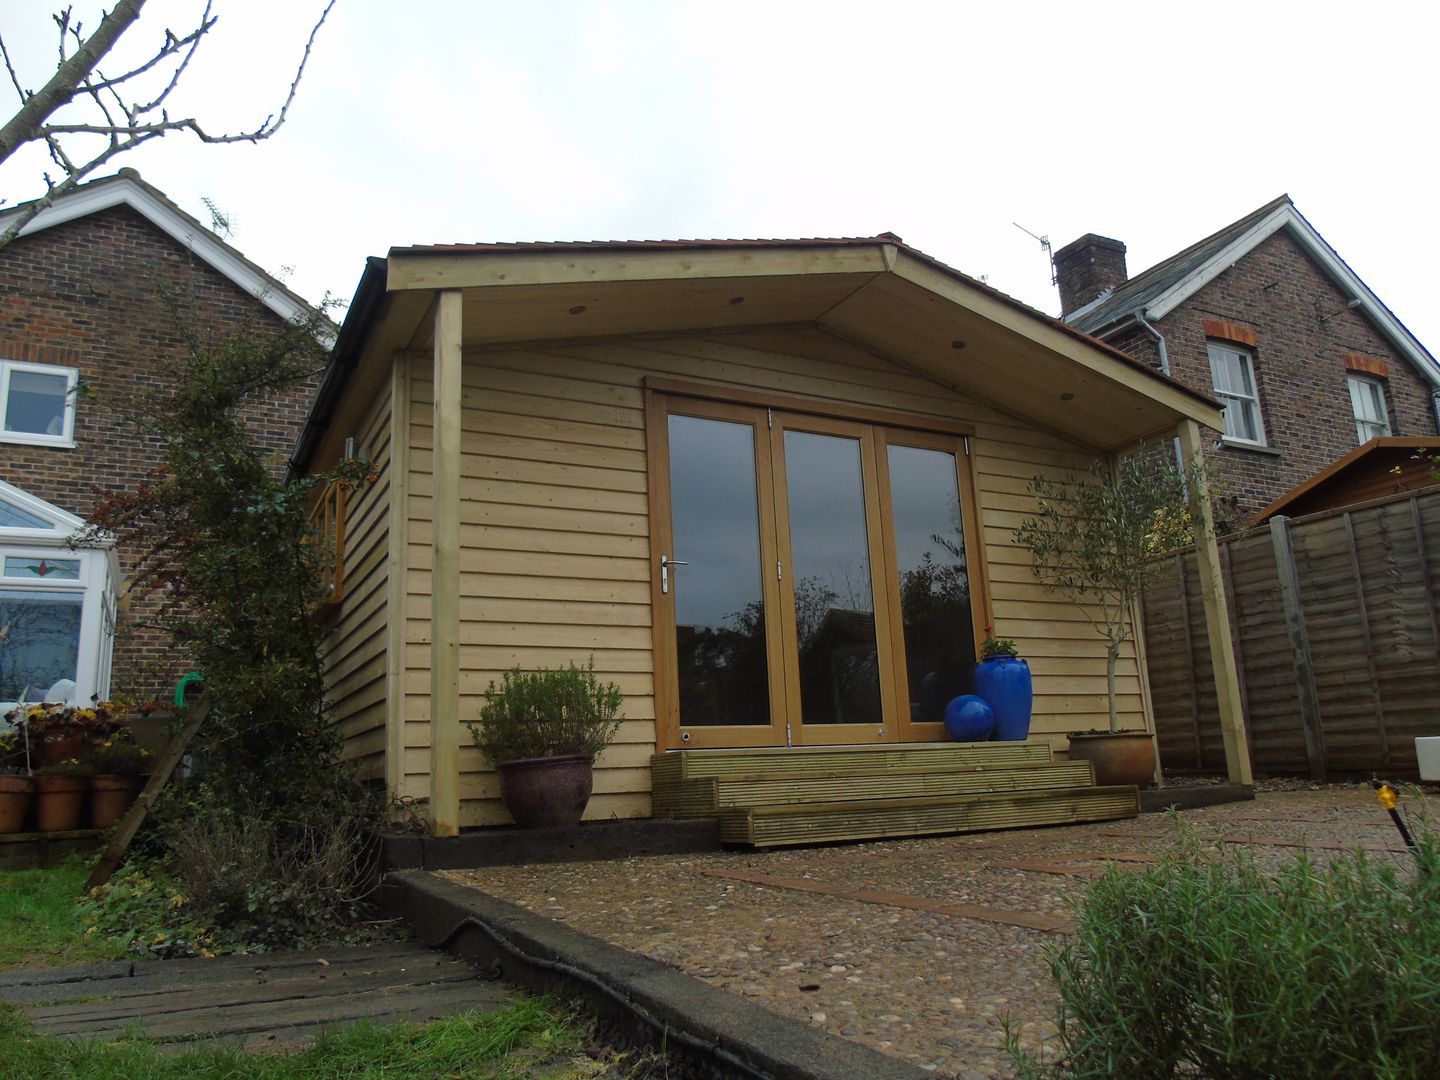 Pitched Roof Garden Office with Storage Miniature Manors Ltd Study/office garden room,summerhouse,garden office,workshop